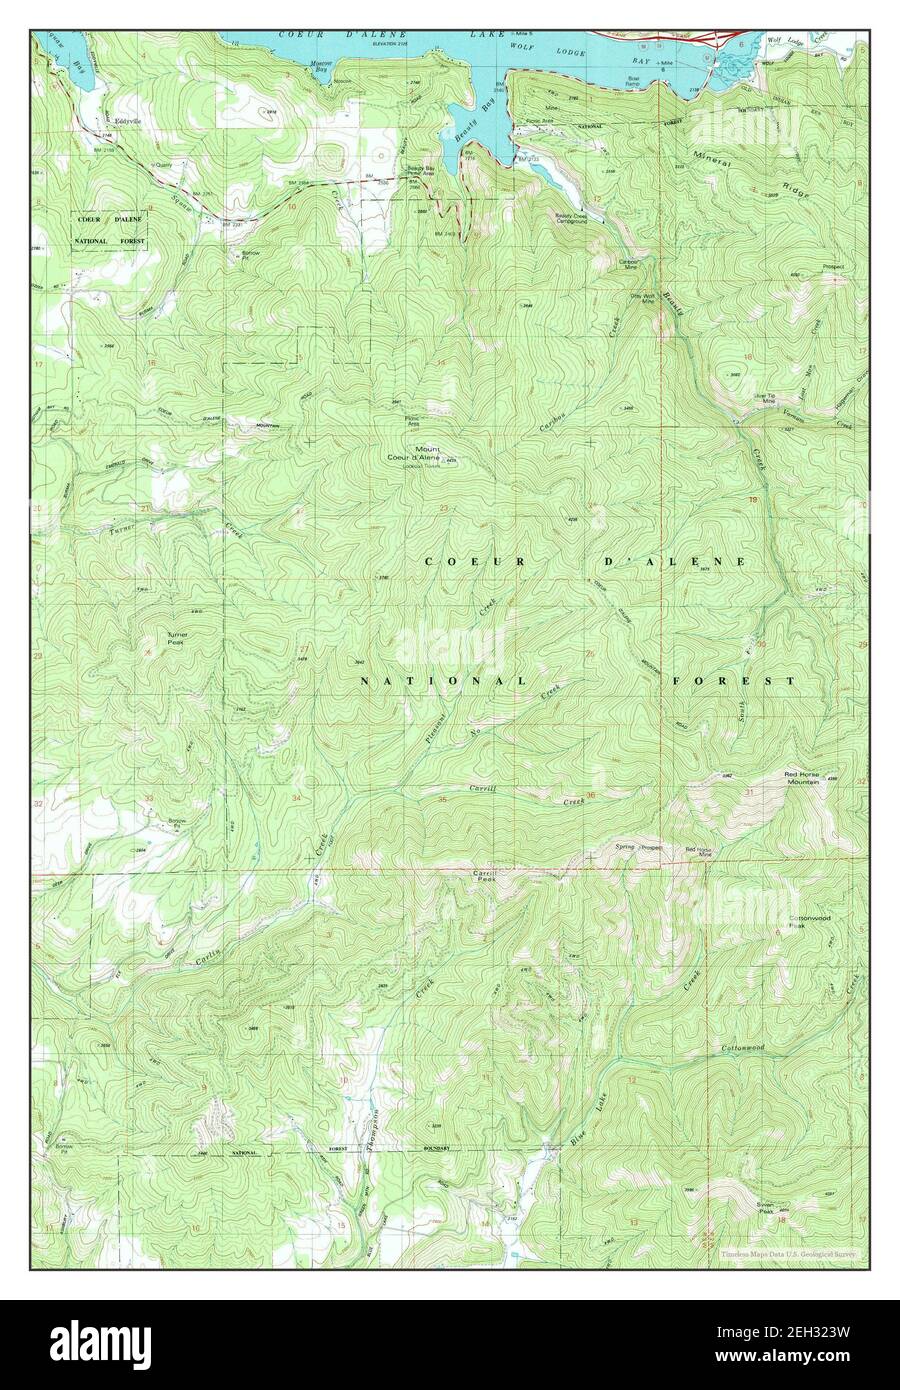 Mount Coeur DAlene, Idaho, map 1981, 1:24000, United States of America by Timeless Maps, data U.S. Geological Survey Stock Photo